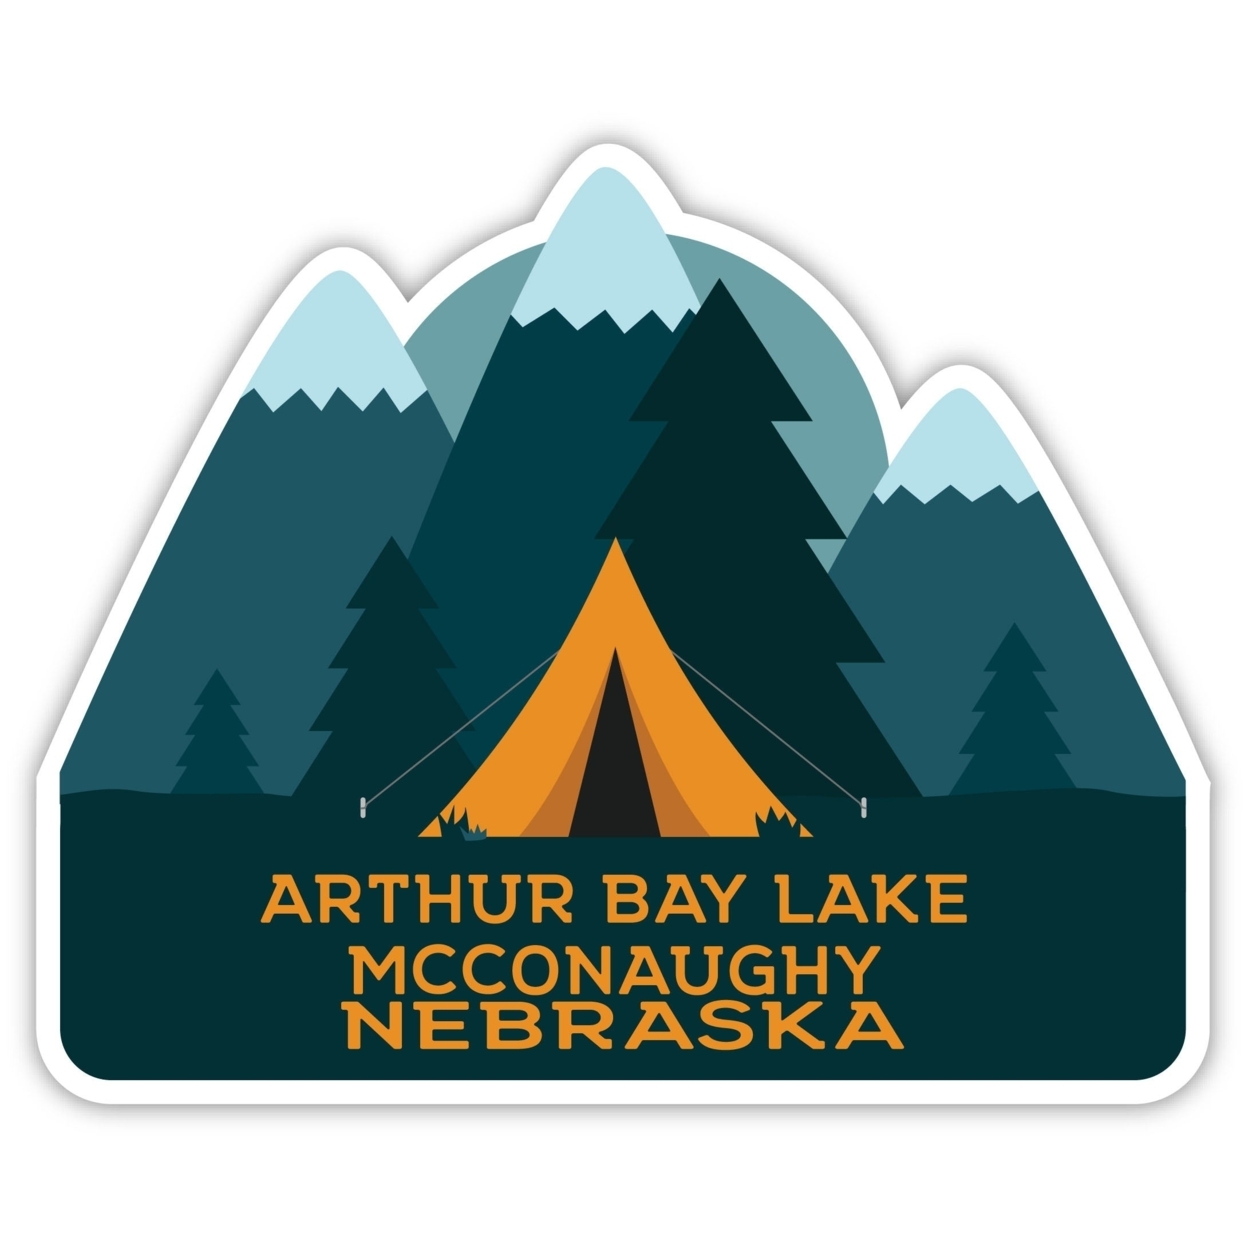 Arthur Bay Lake Mcconaughy Nebraska Souvenir Decorative Stickers (Choose Theme And Size) - Single Unit, 4-Inch, Tent